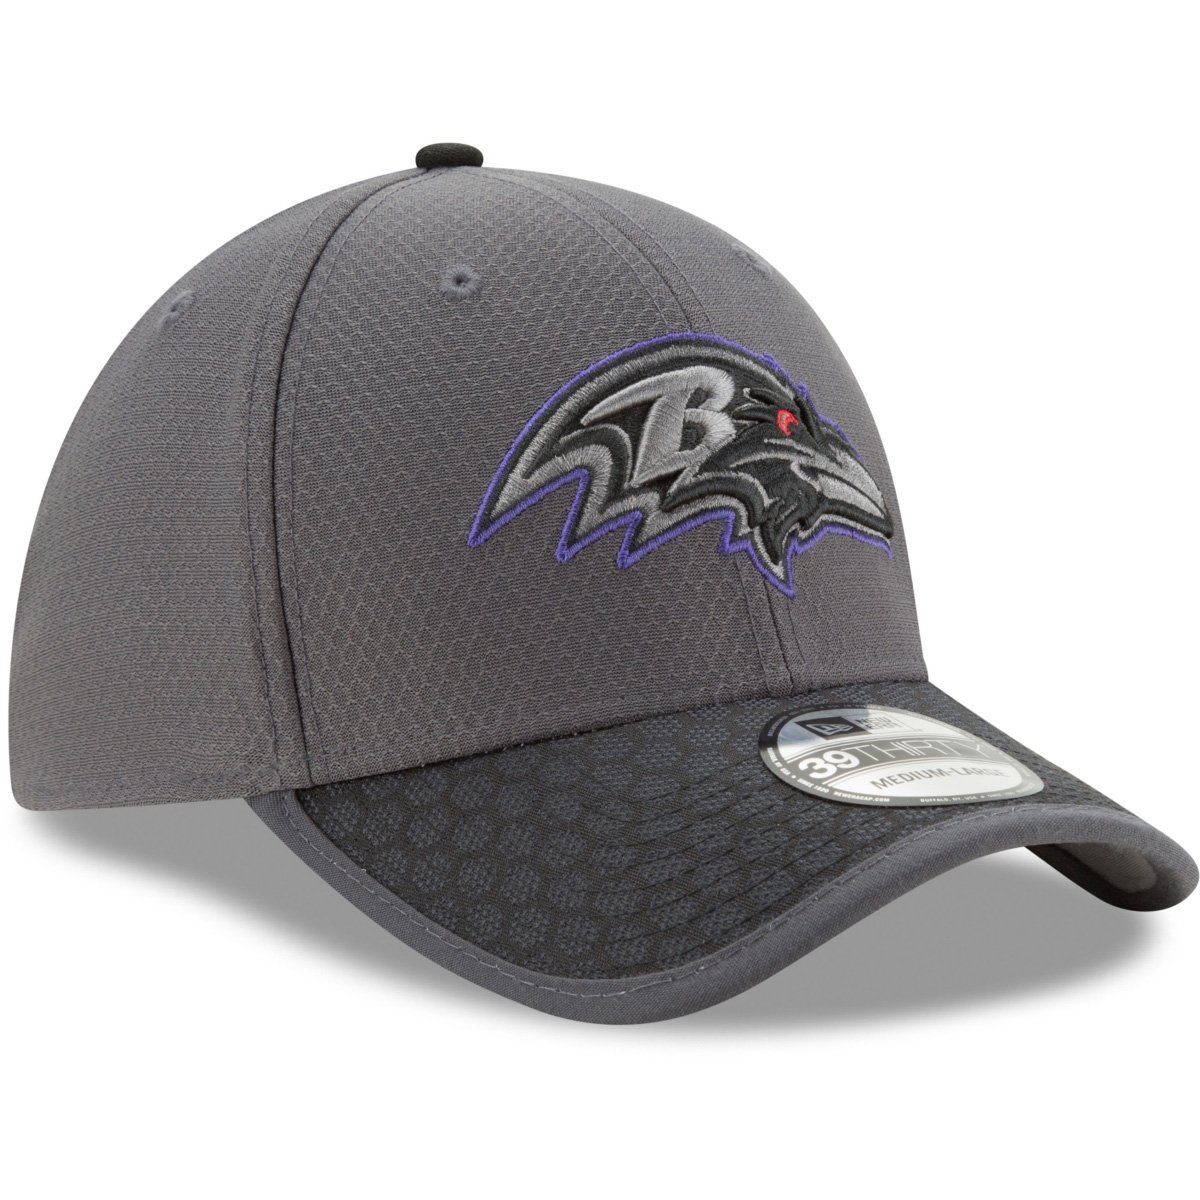 New Era NFL 39Thirty Ravens SIDELINE Flex Cap Baltimore